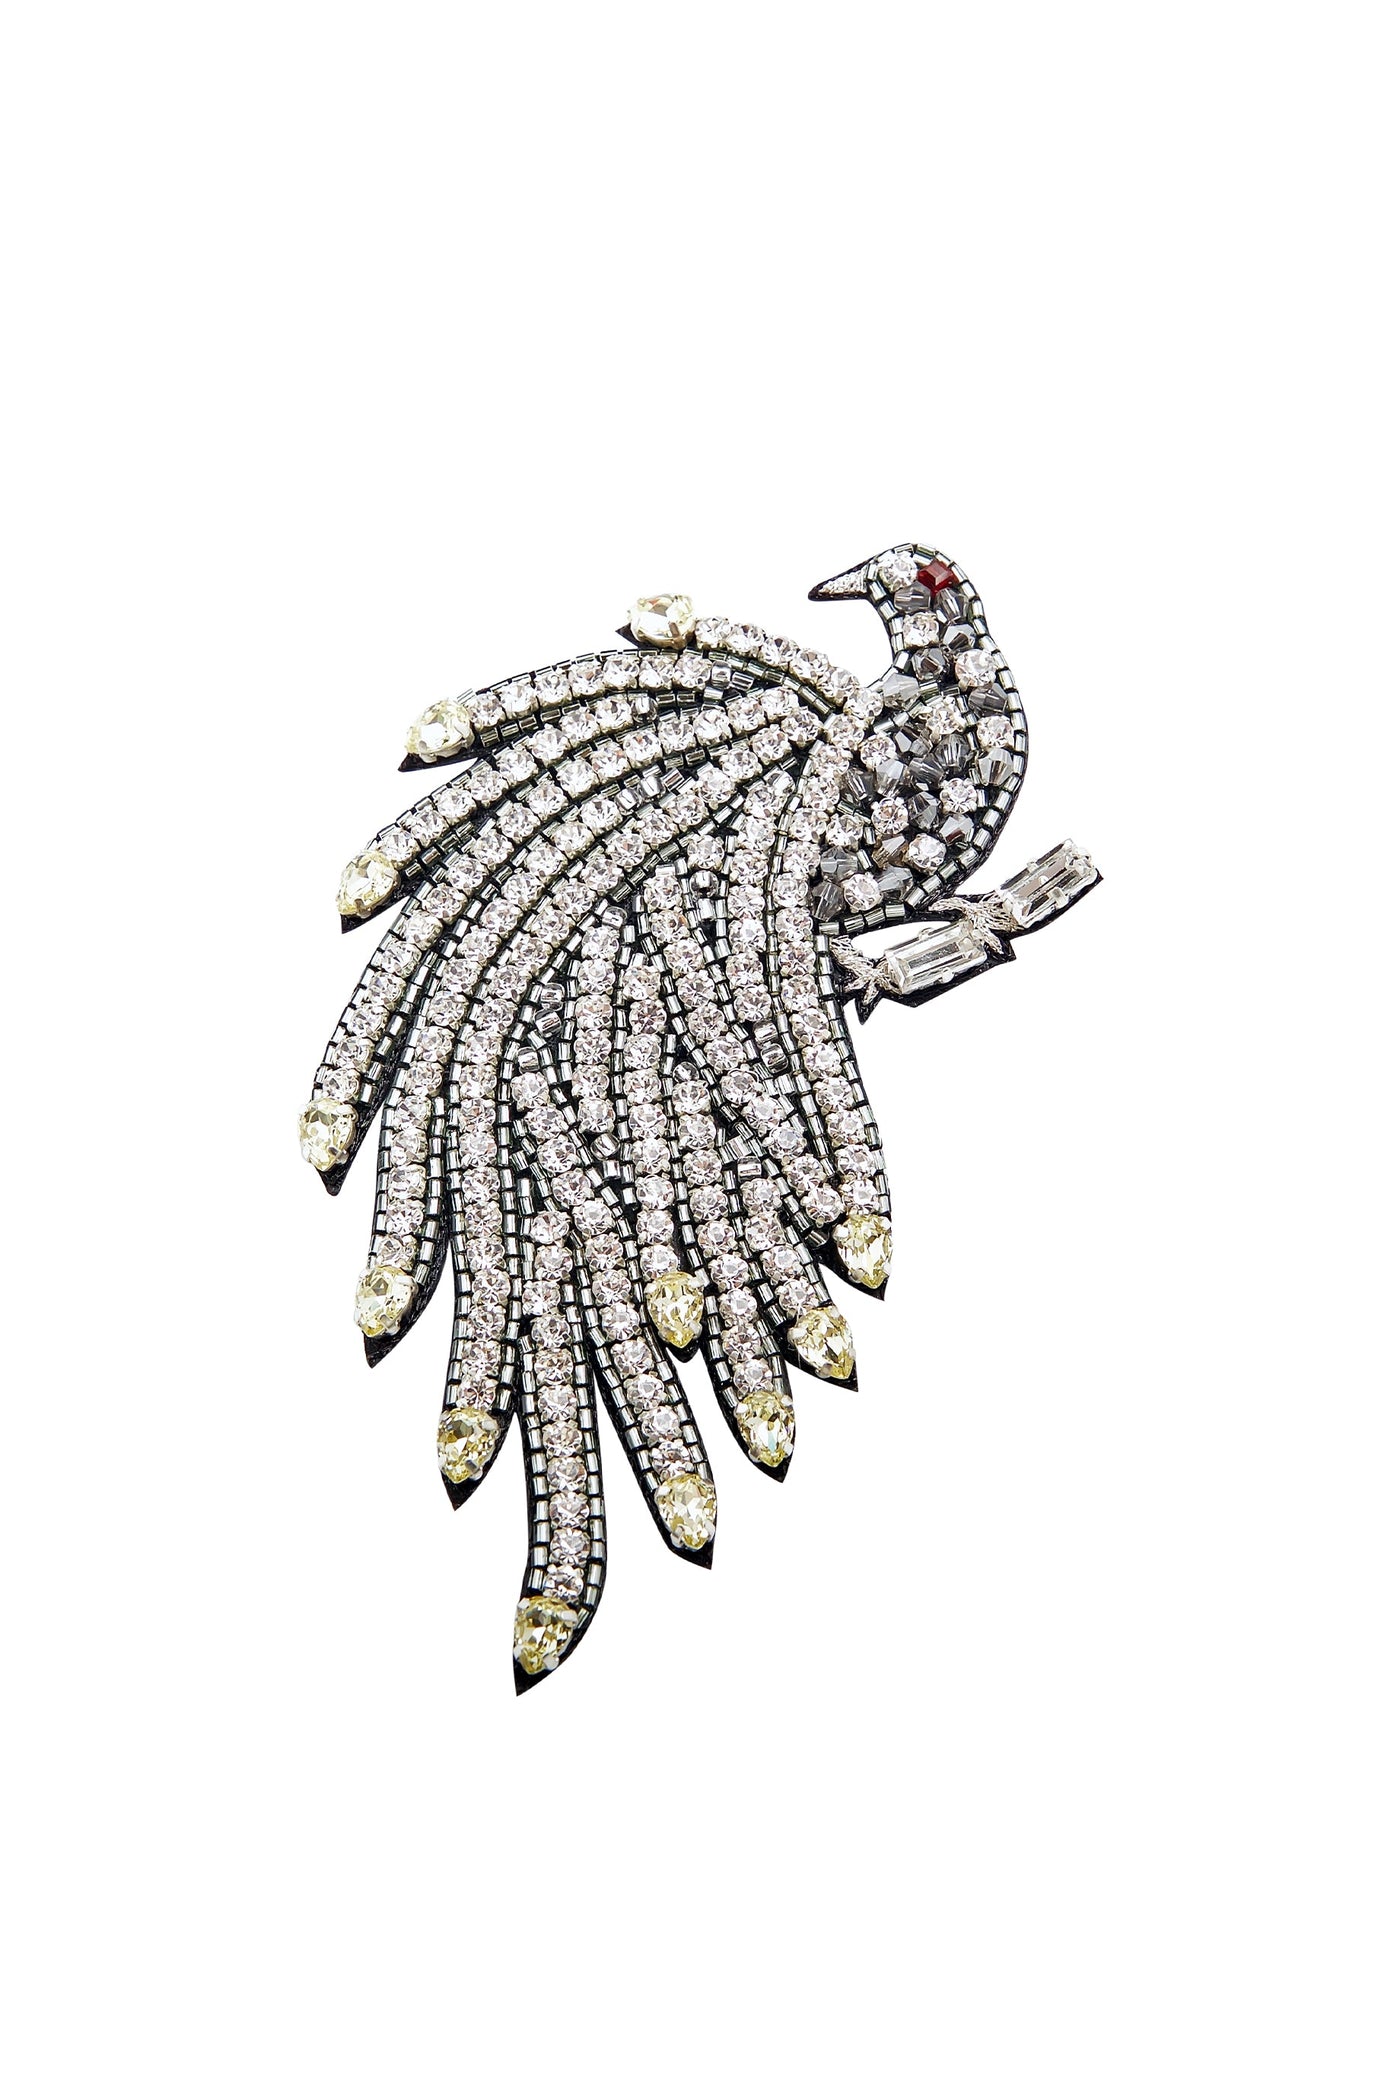 Madiso Peacock Brooch - Silver